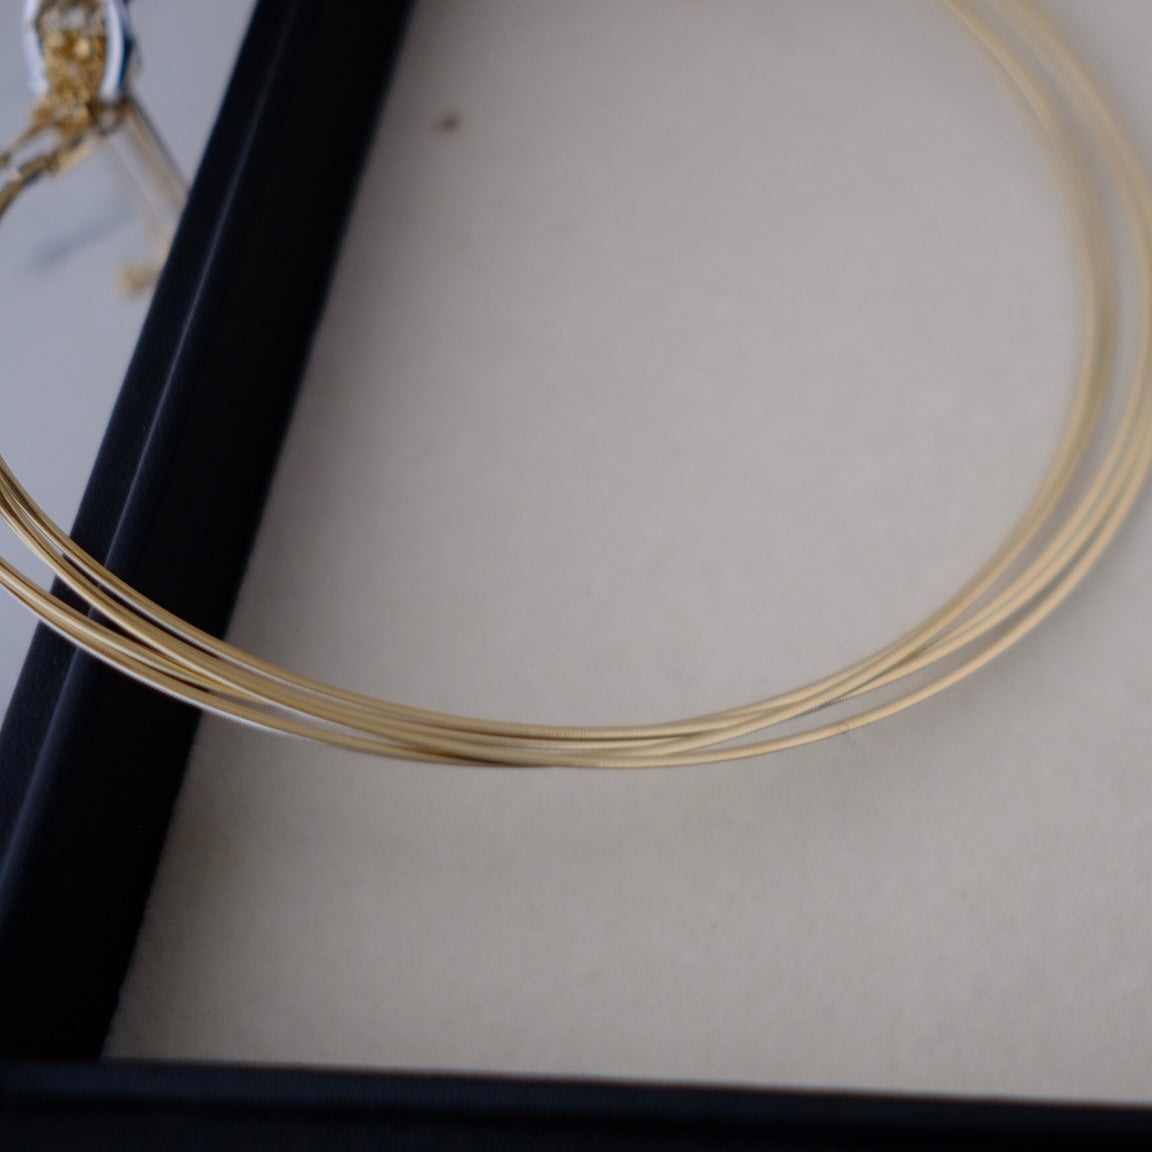 AU750, Japan Made 18k Double Side Collar Chain, 40+5cm, 2.92g